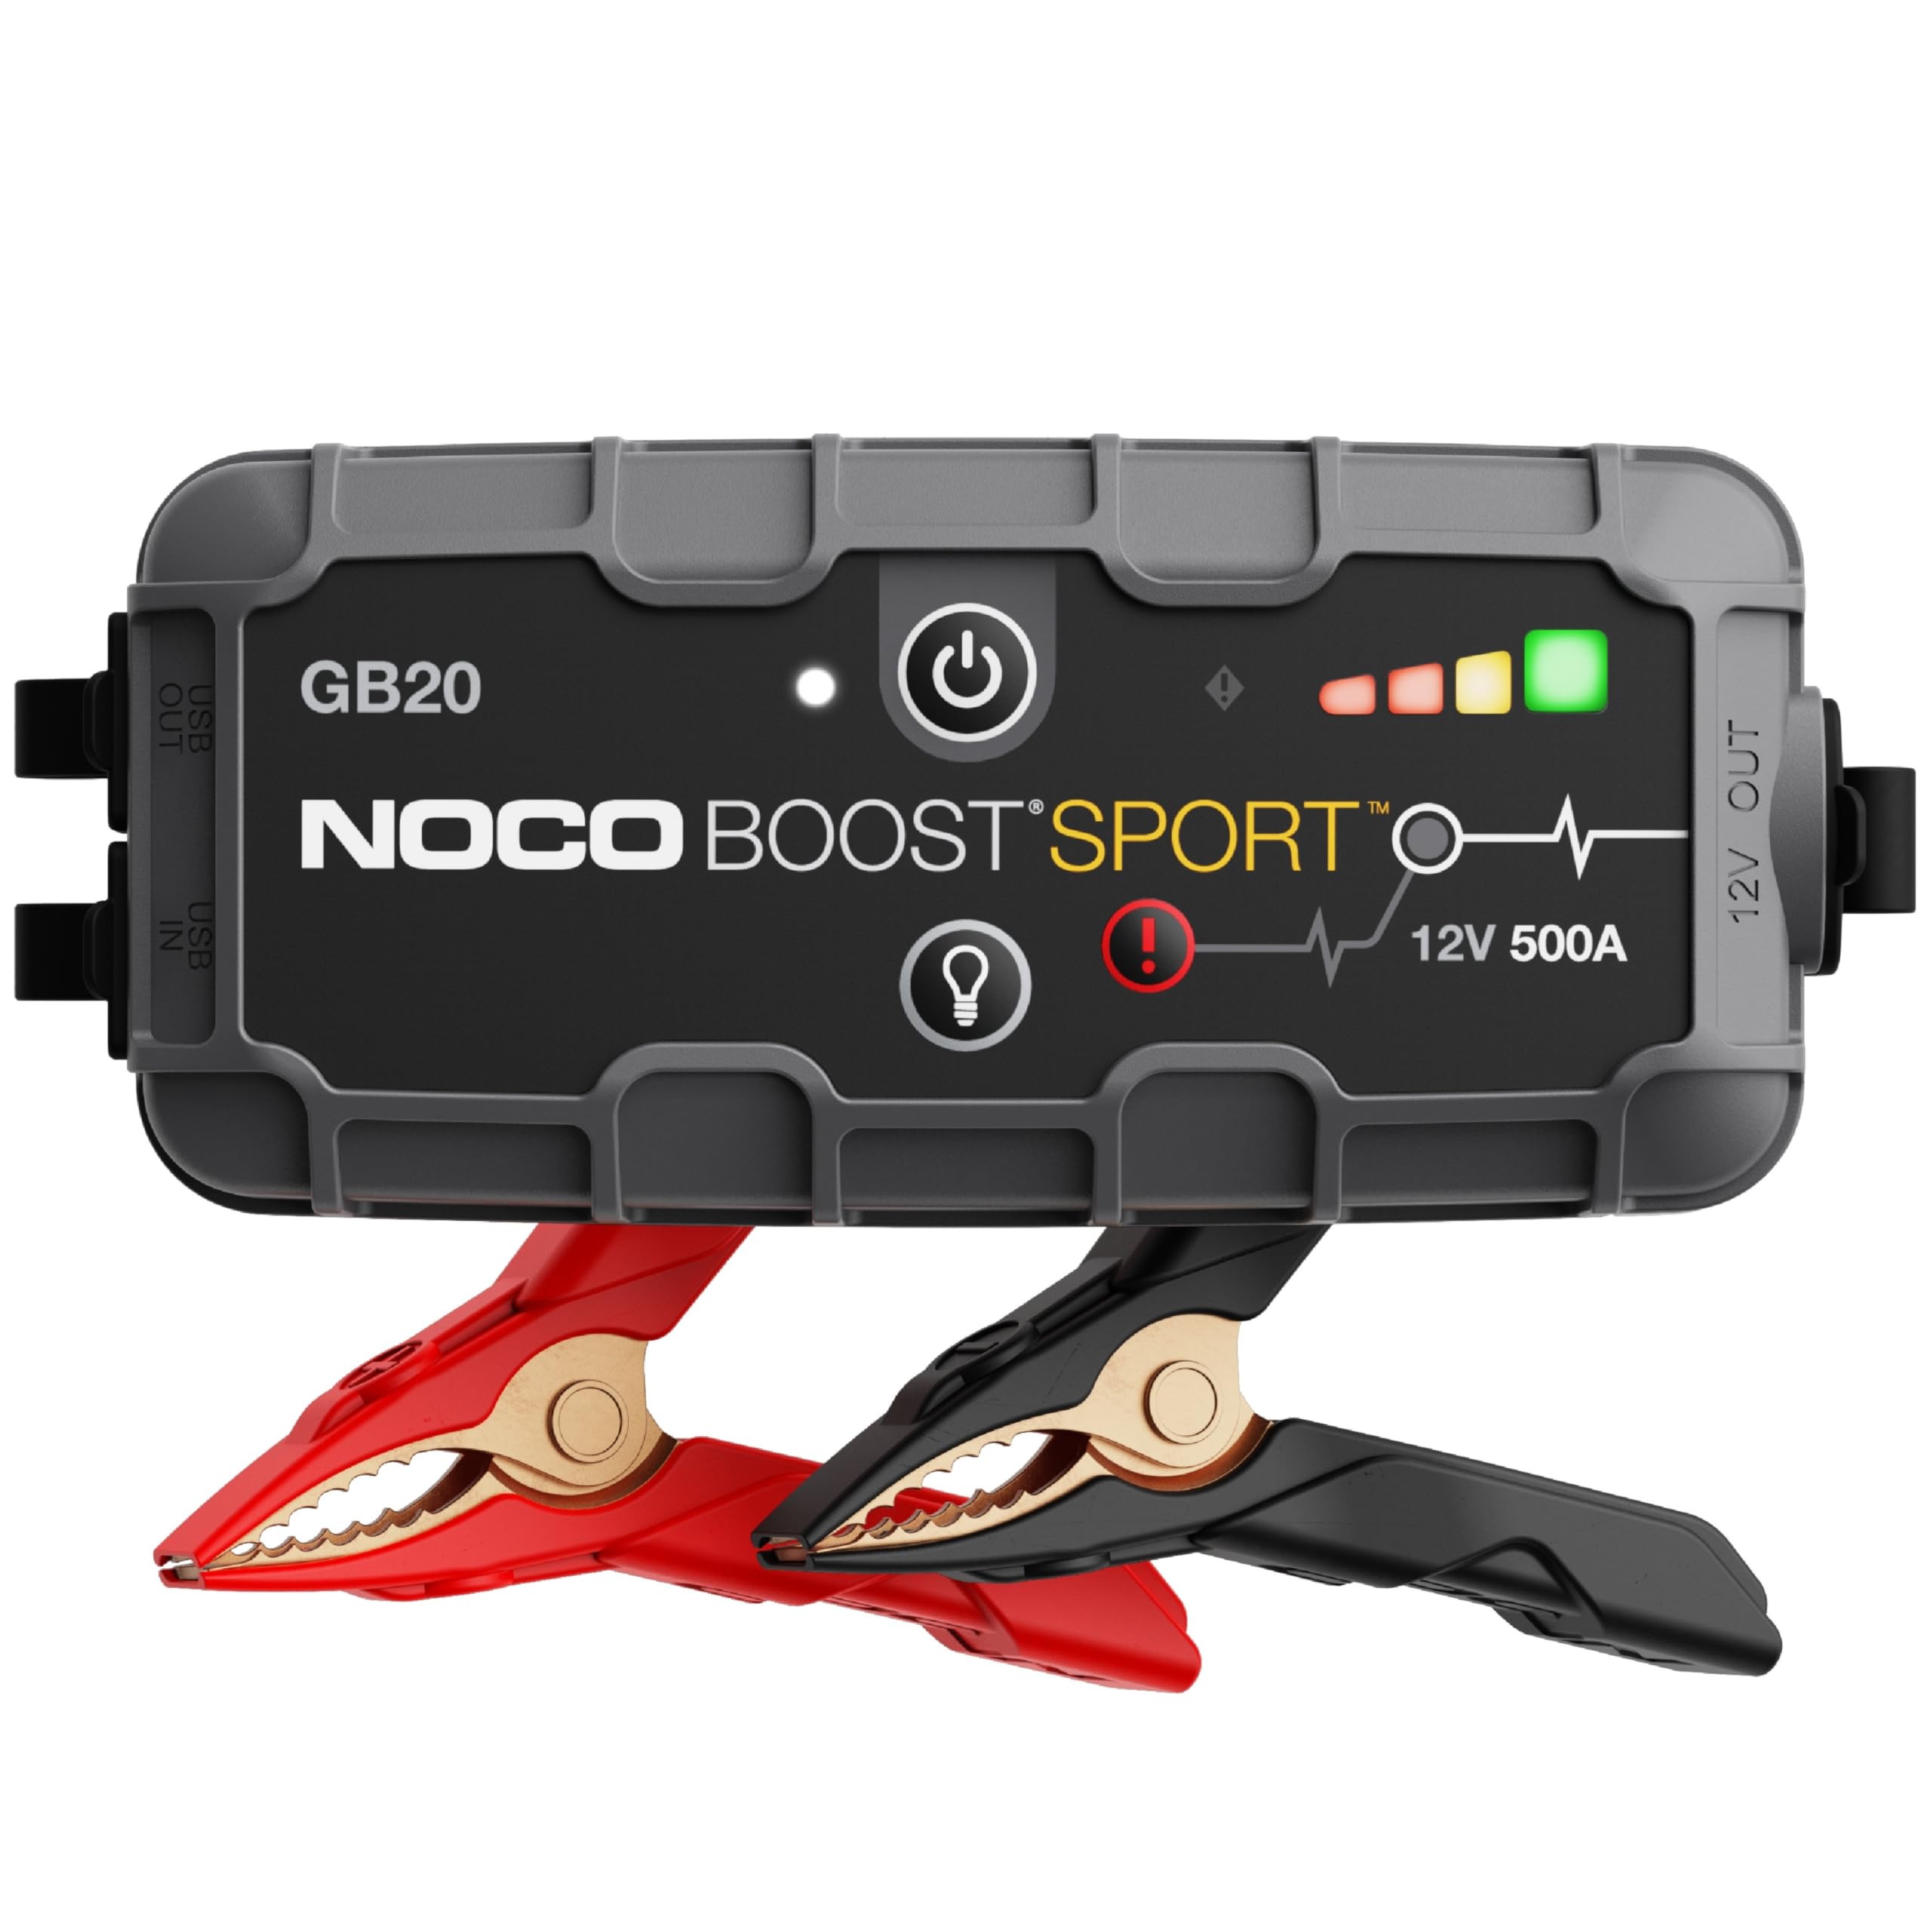  NOCO Boost Sport GB20 500アンペア 12ボルトウルトラセーフリチウムジャンプスターターボックス、カーバッテリーブースターパック、ポータブルパワーバ...